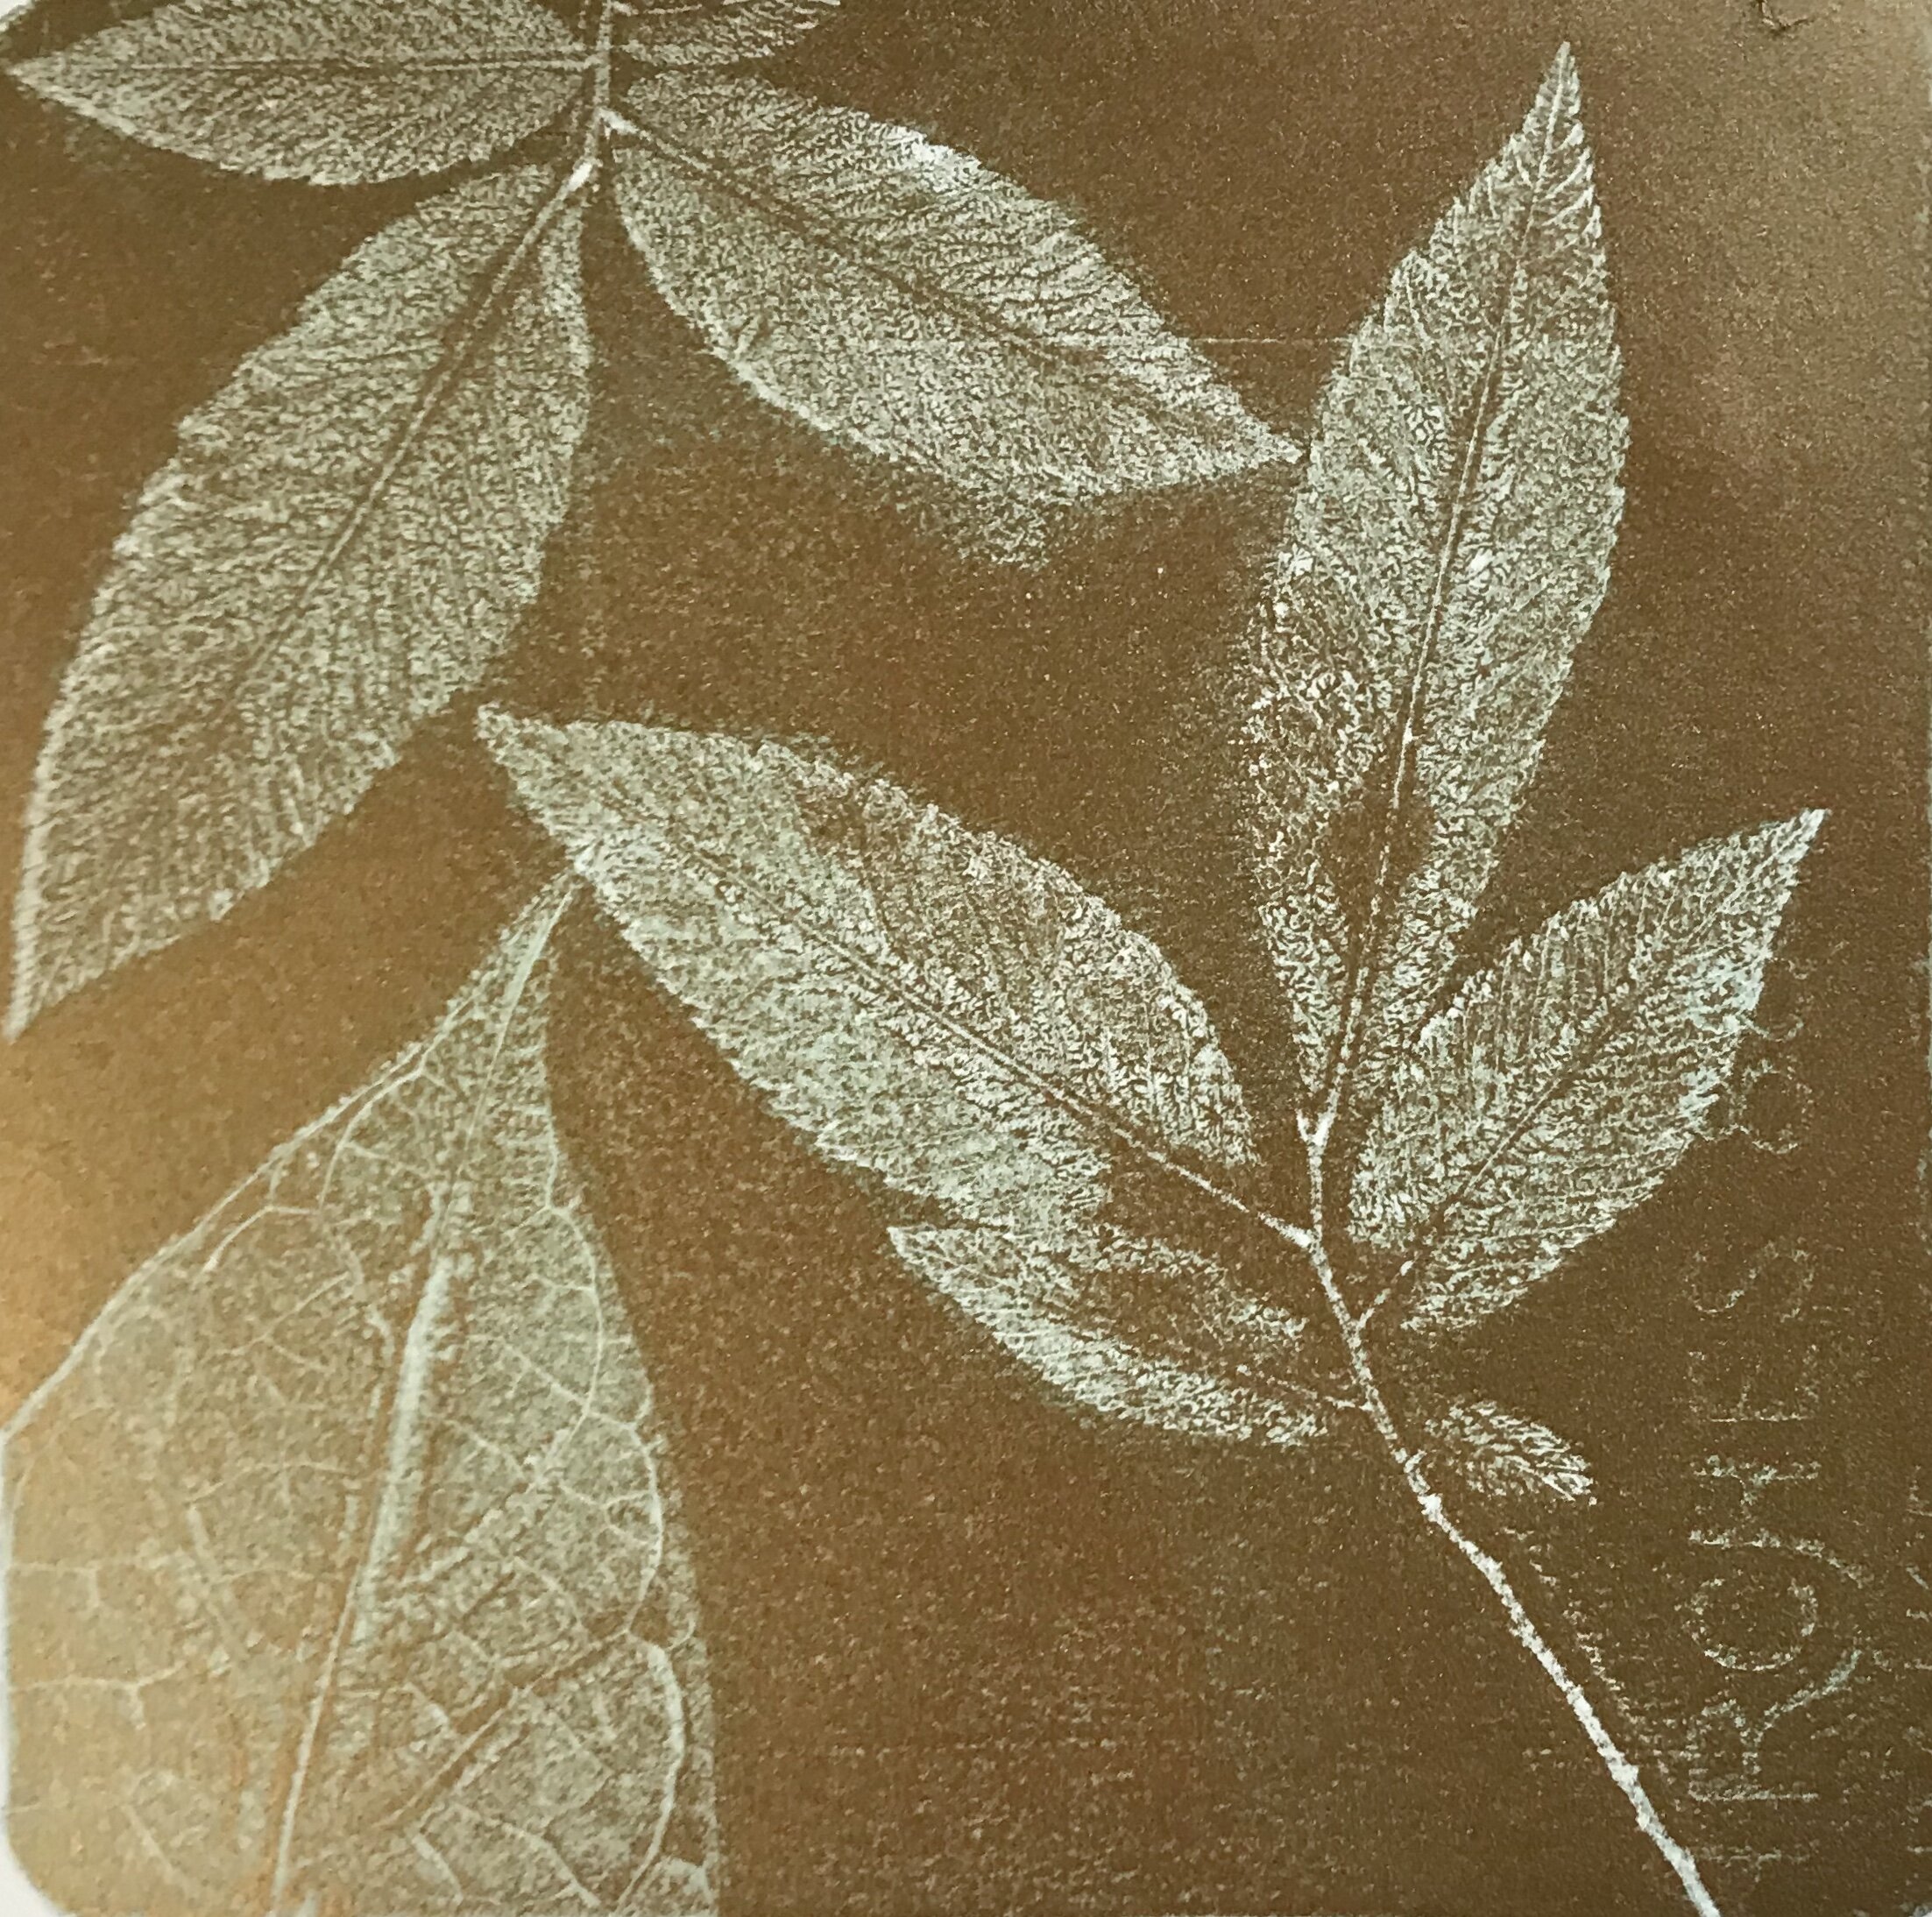 Iridescent Bronze: Gel Plate Printing with Botanicals — Lee Monts Original  Art